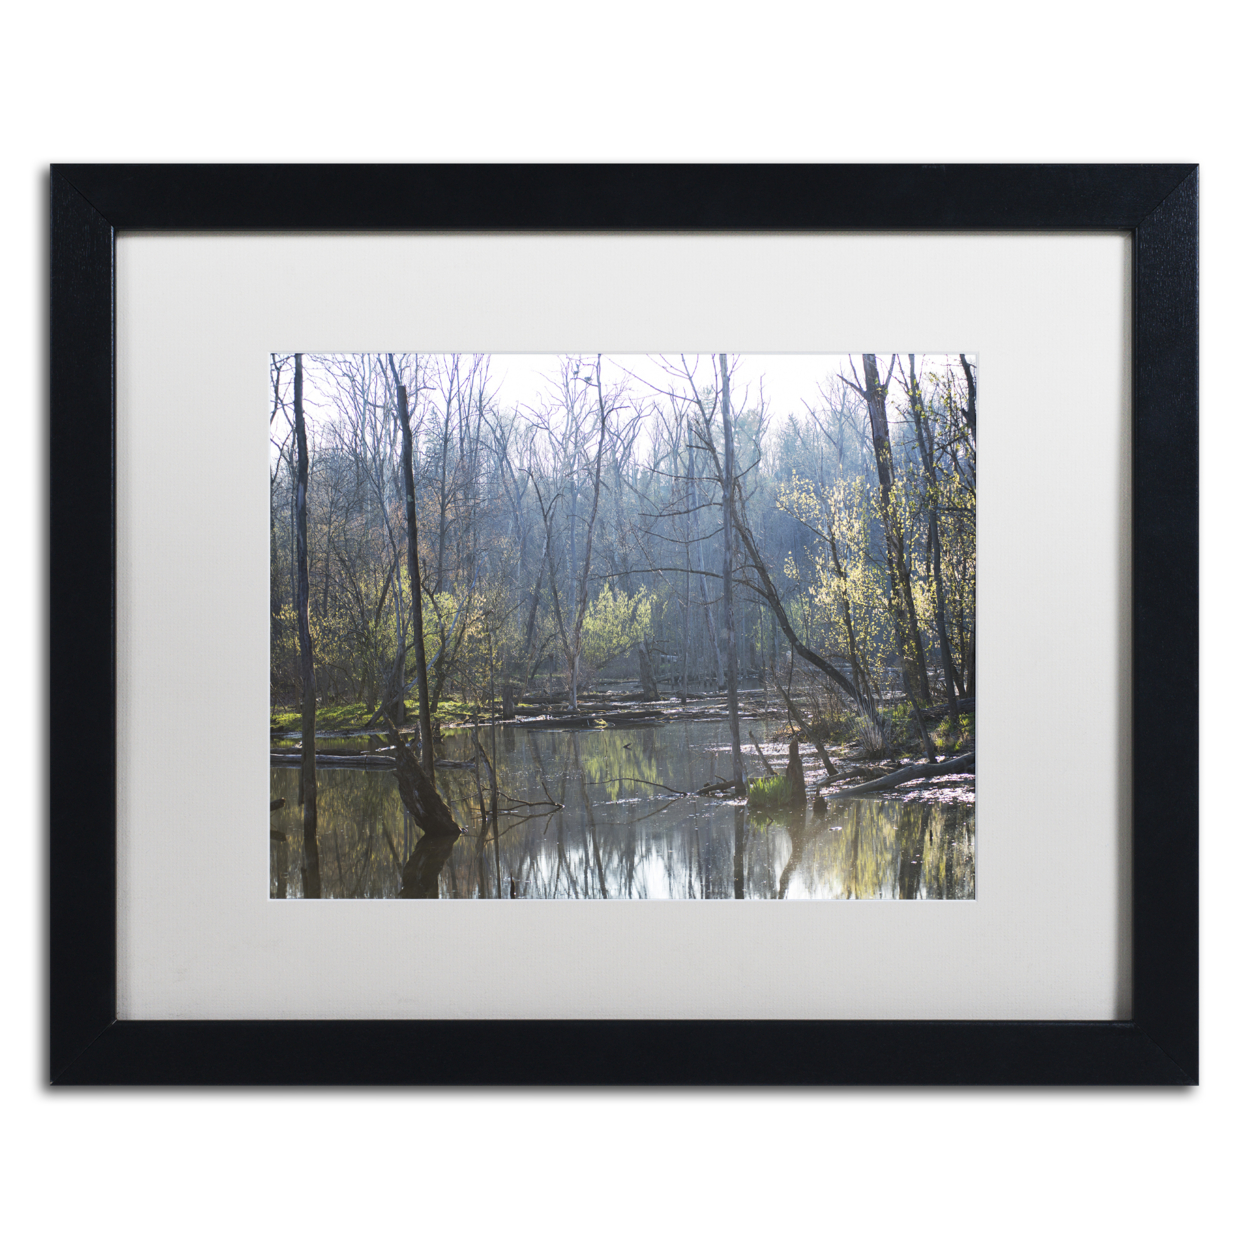 Kurt Shaffer 'Springtime In The Wetlands' Black Wooden Framed Art 18 X 22 Inches